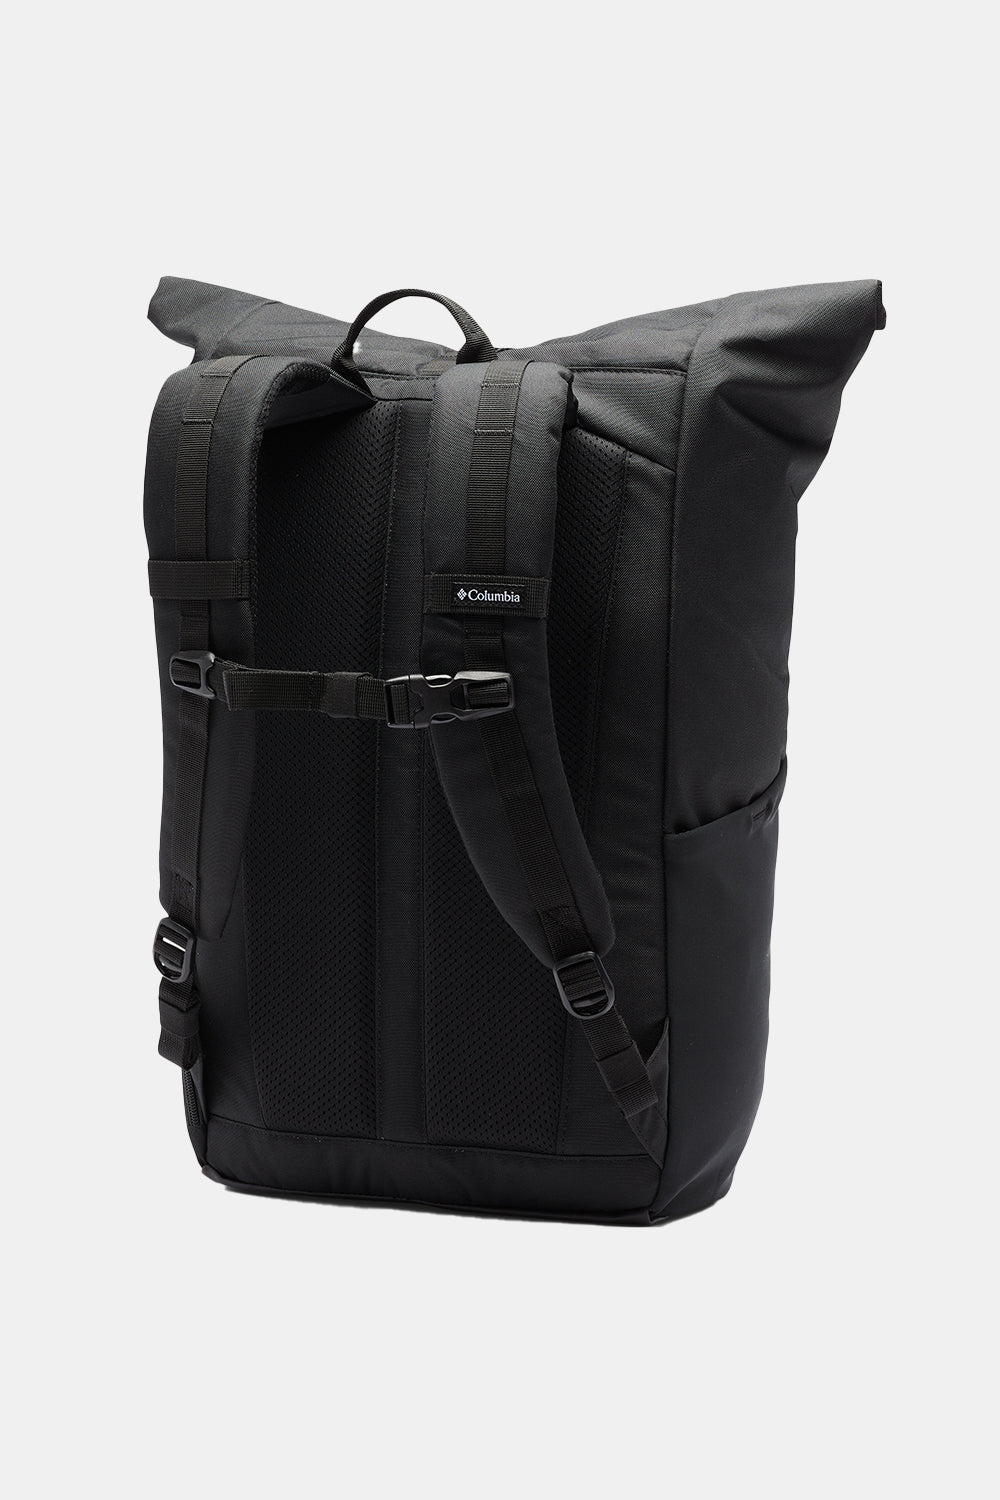 Columbia Convey II 27L Rolltop Backpack (Black)
